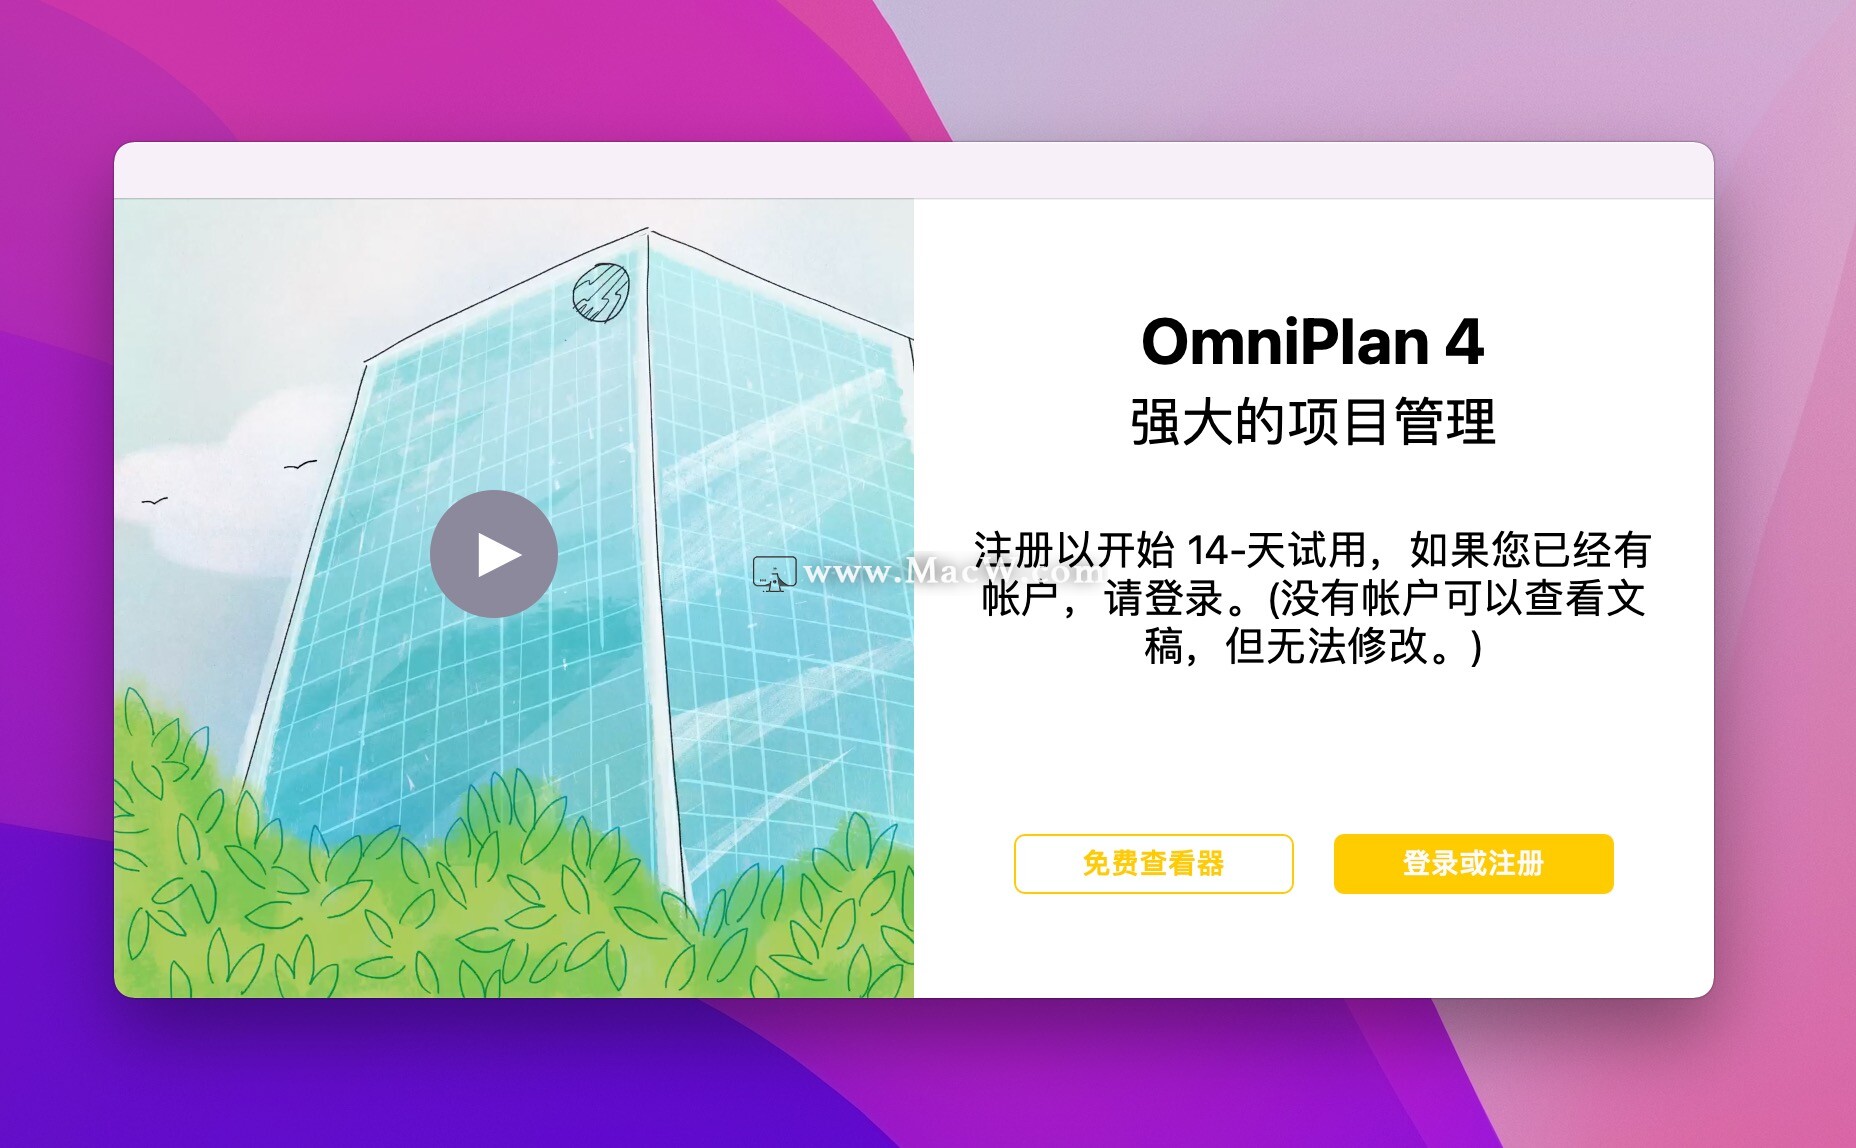 Mac用户必备的项目管理工具：OmniPlan Pro 4 for Mac 完美兼容版